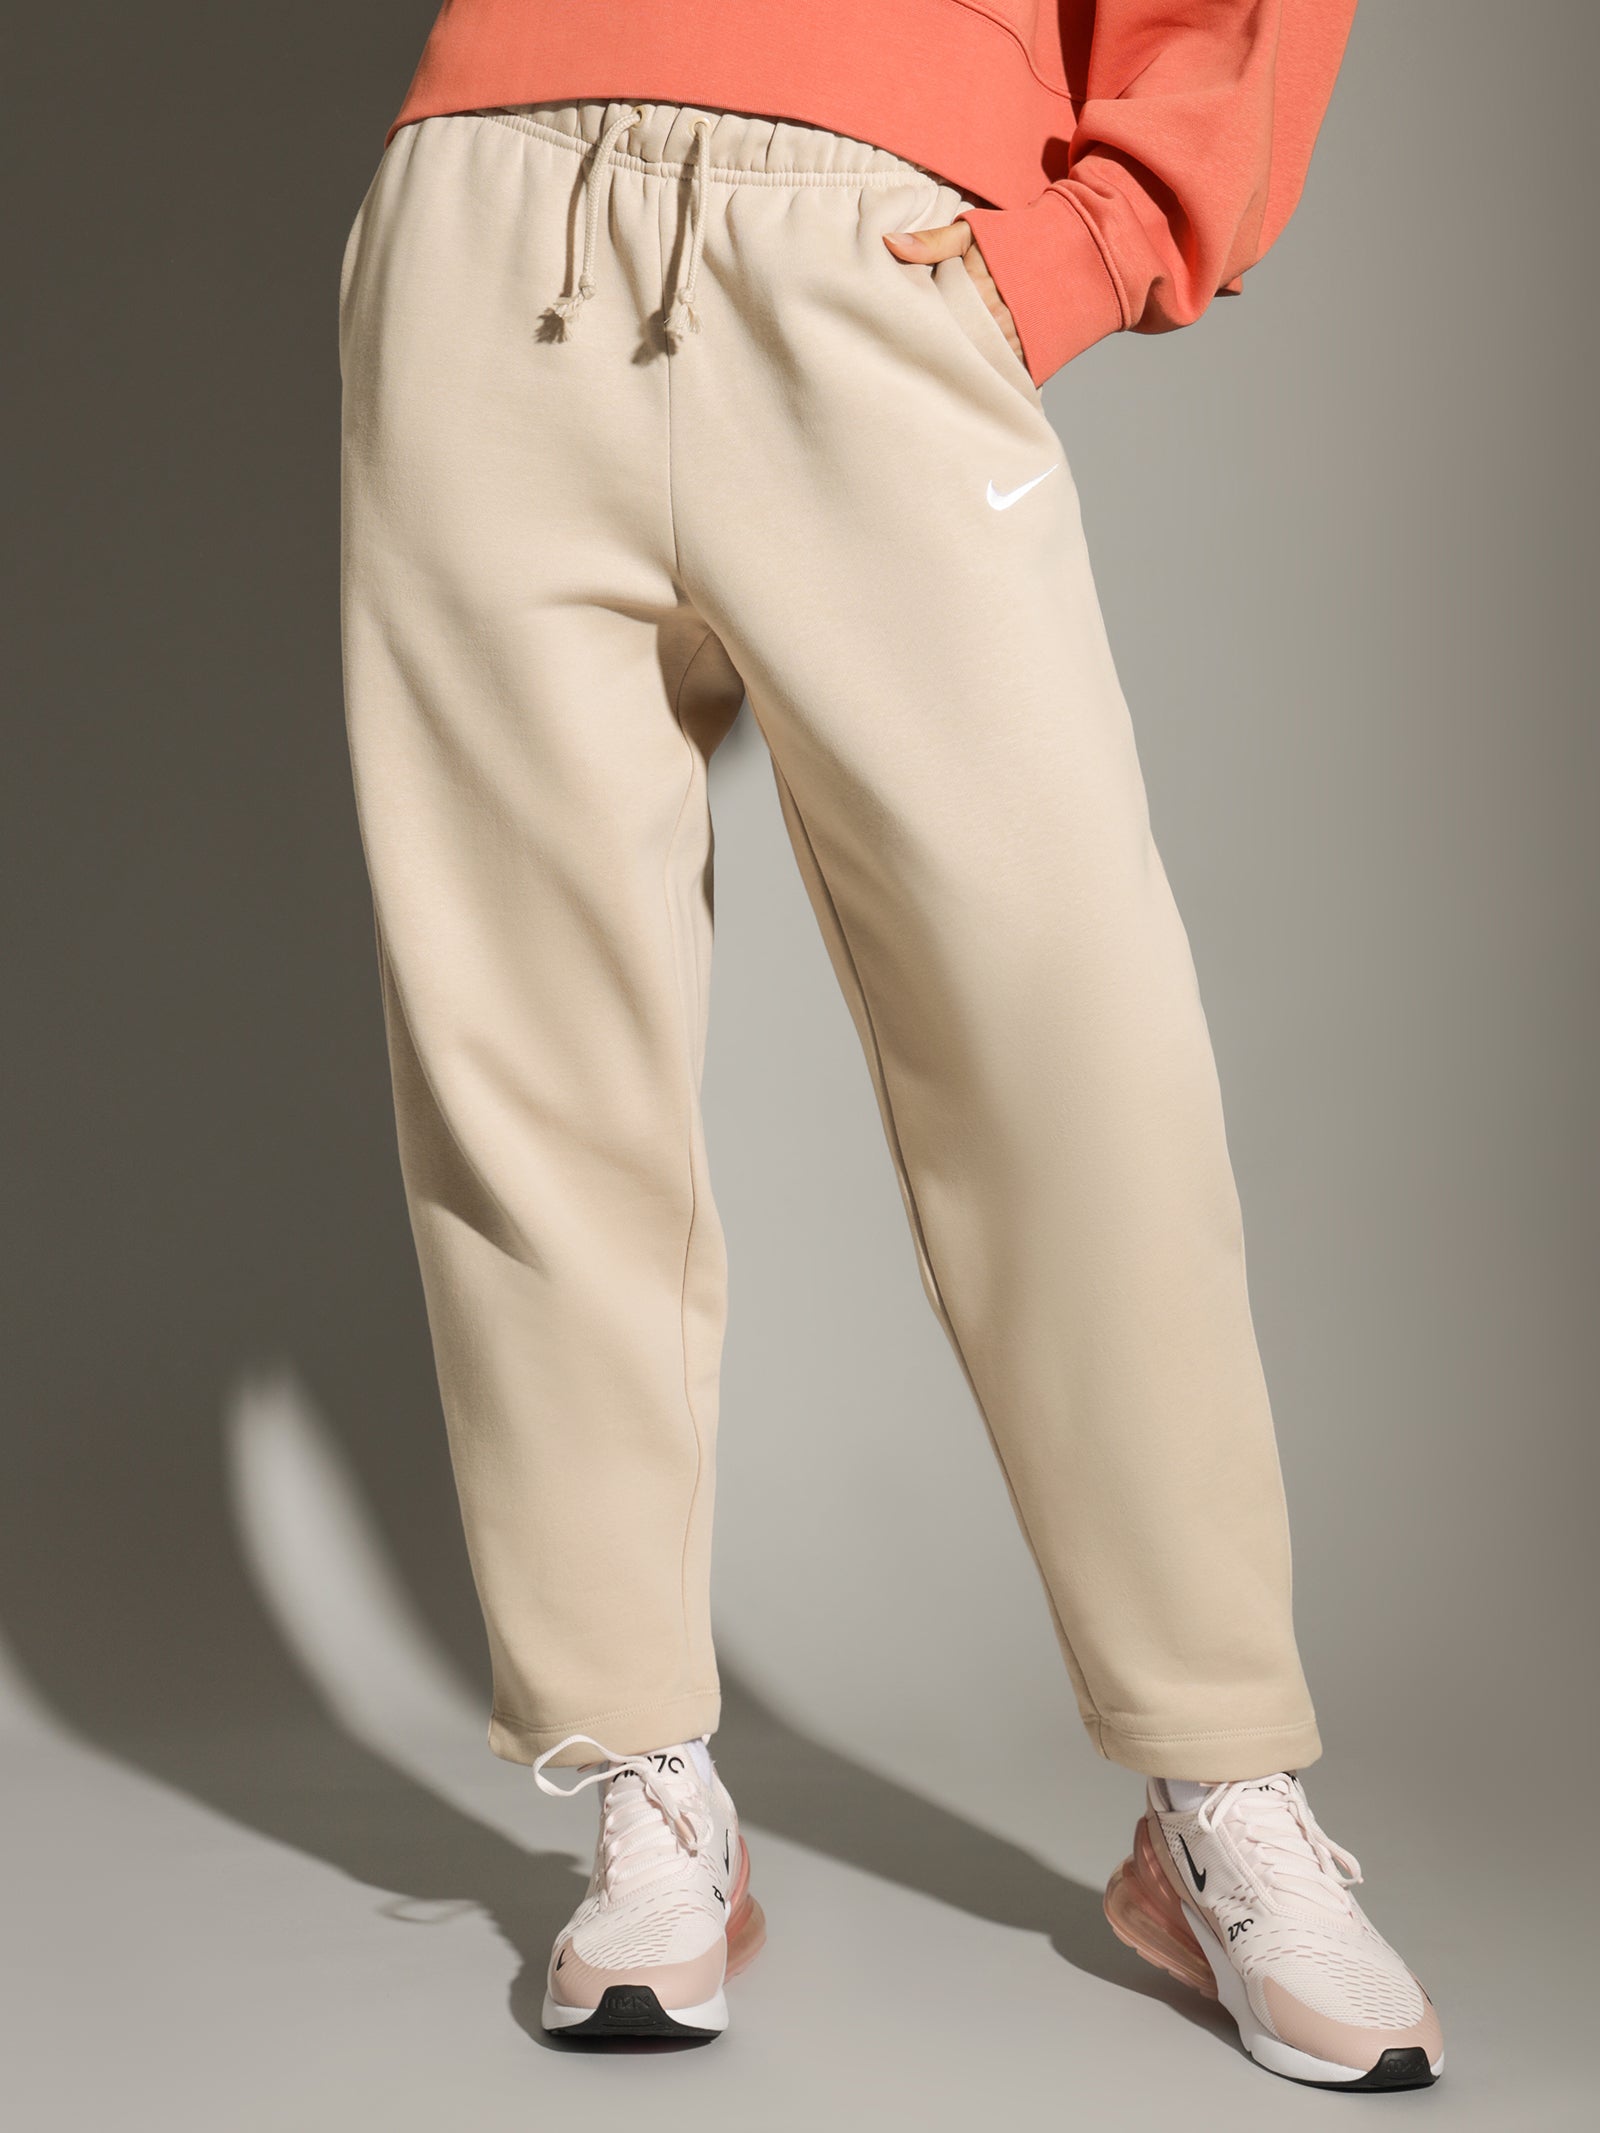 Sportswear Essential Collection Fleece Pants in Sand Drift - Glue